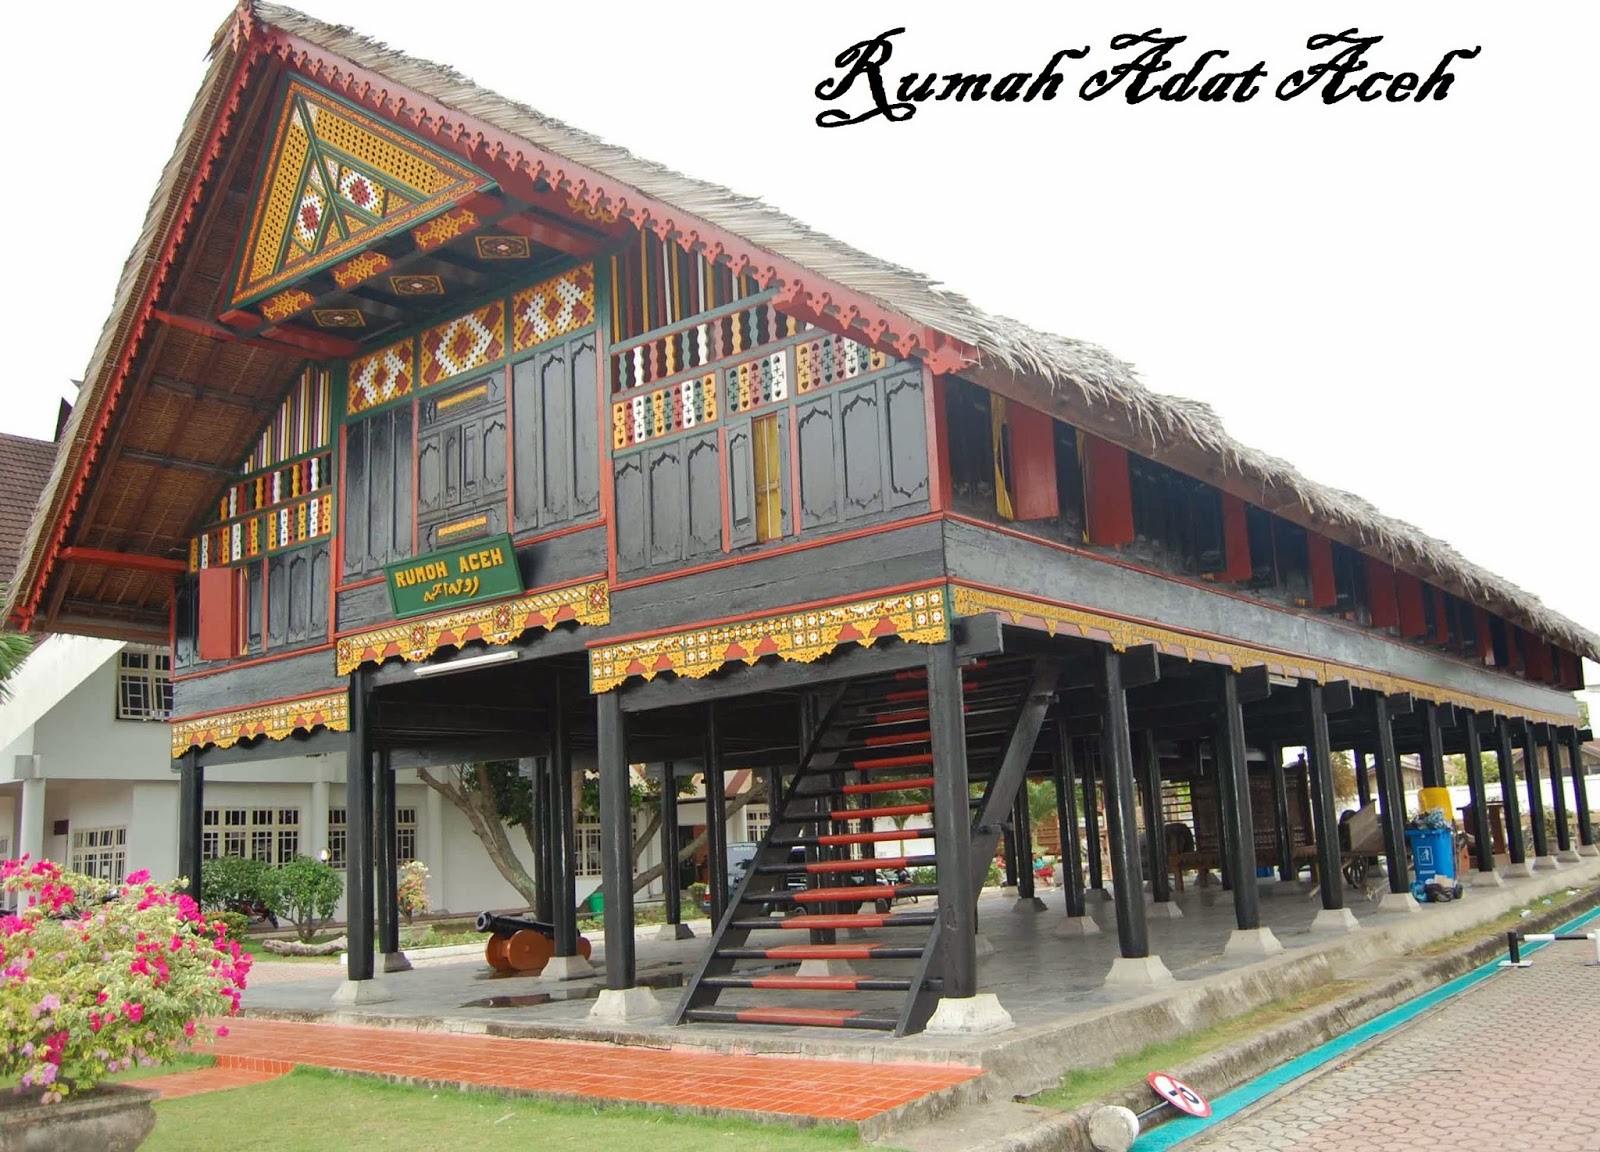 Rumah Adat Aceh - Indonesian Culture